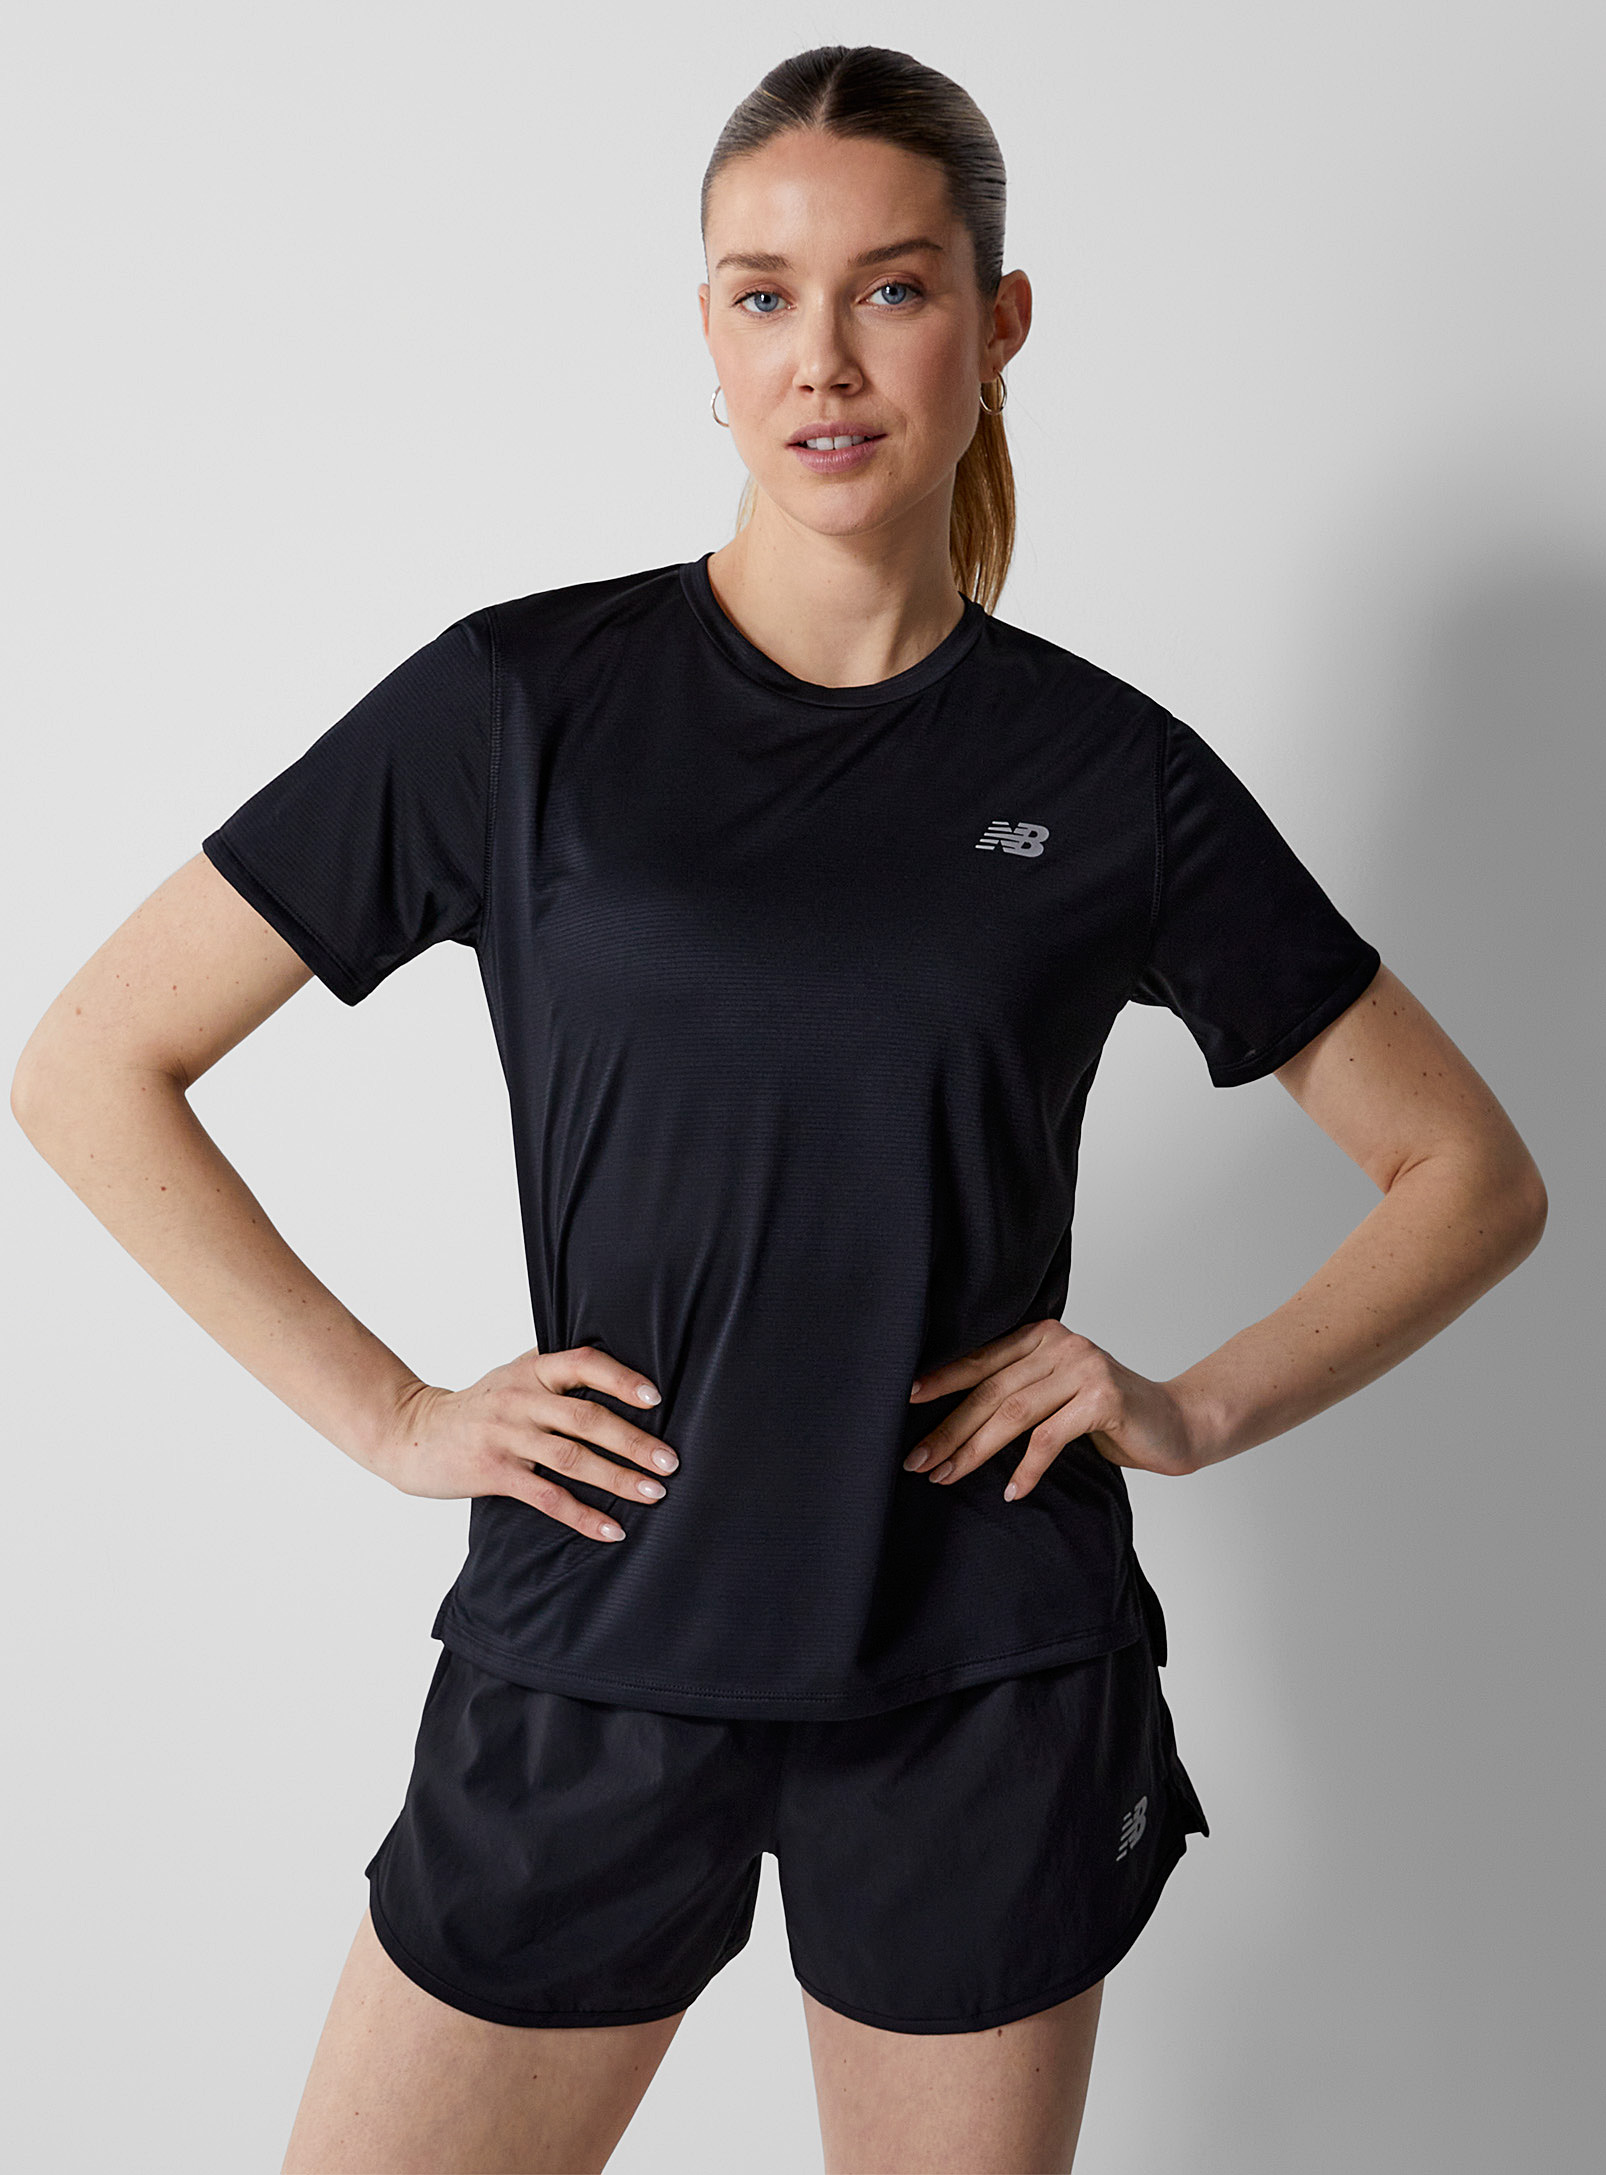 New Balance - Women's Breathable jersey Tee Shirt